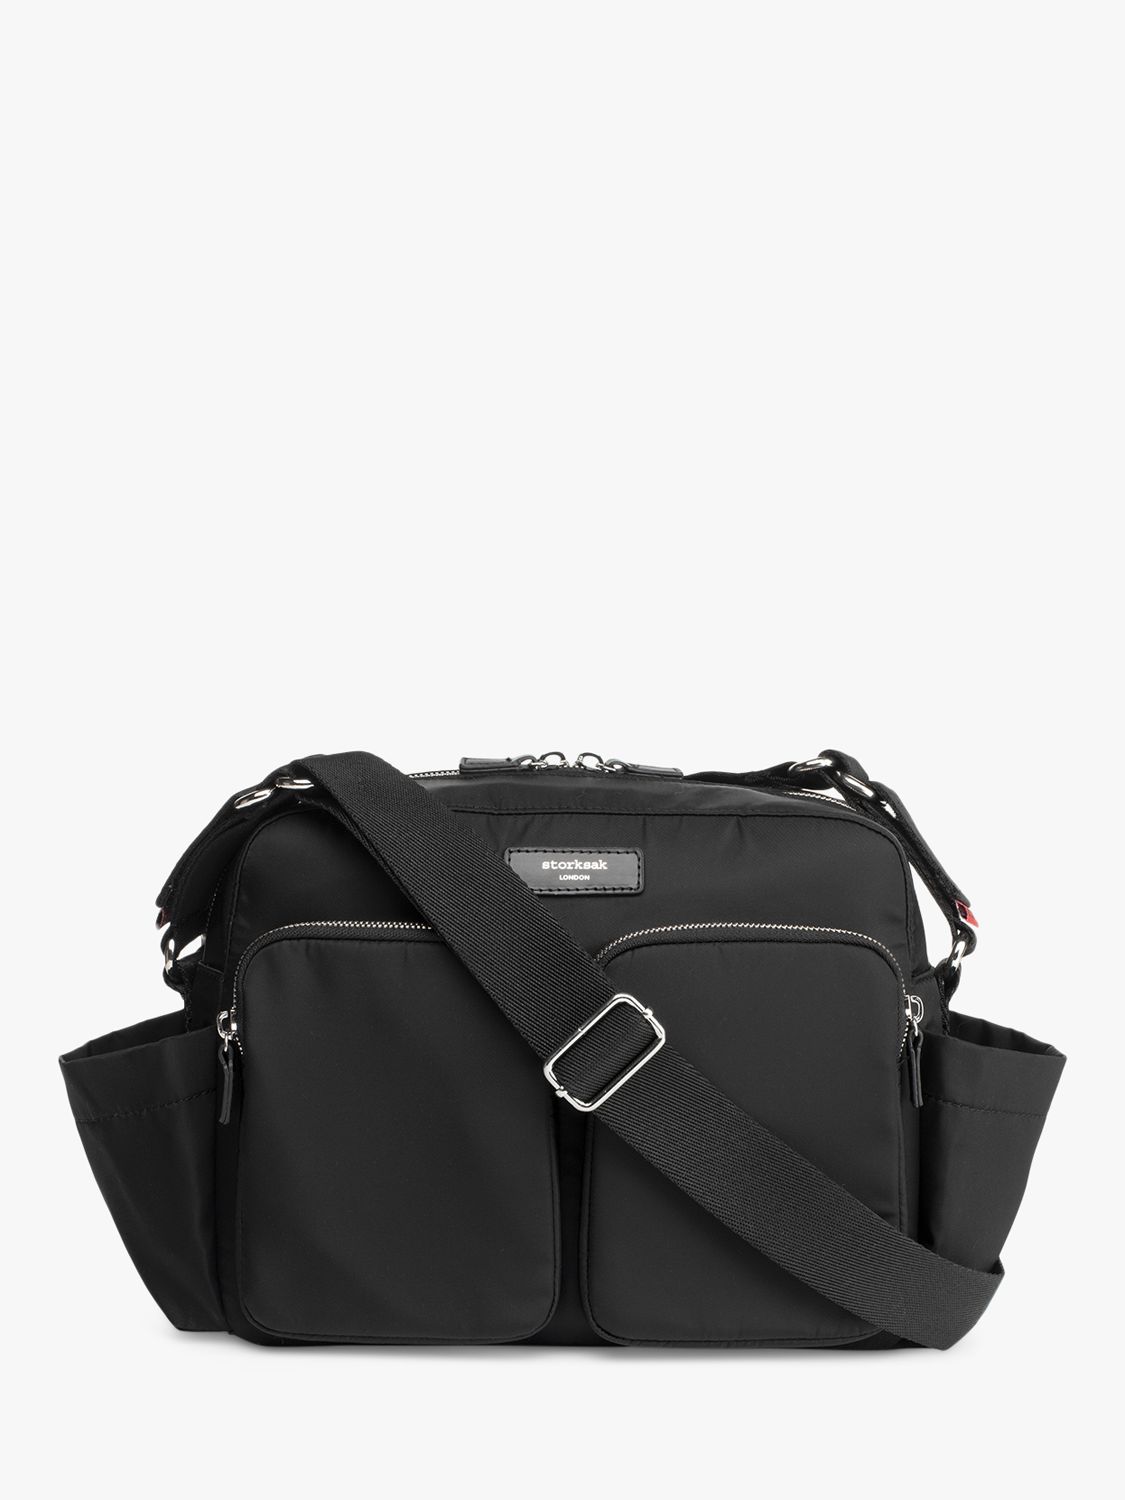 Storksak Alyssa Convertible Backpack - Black & Gold